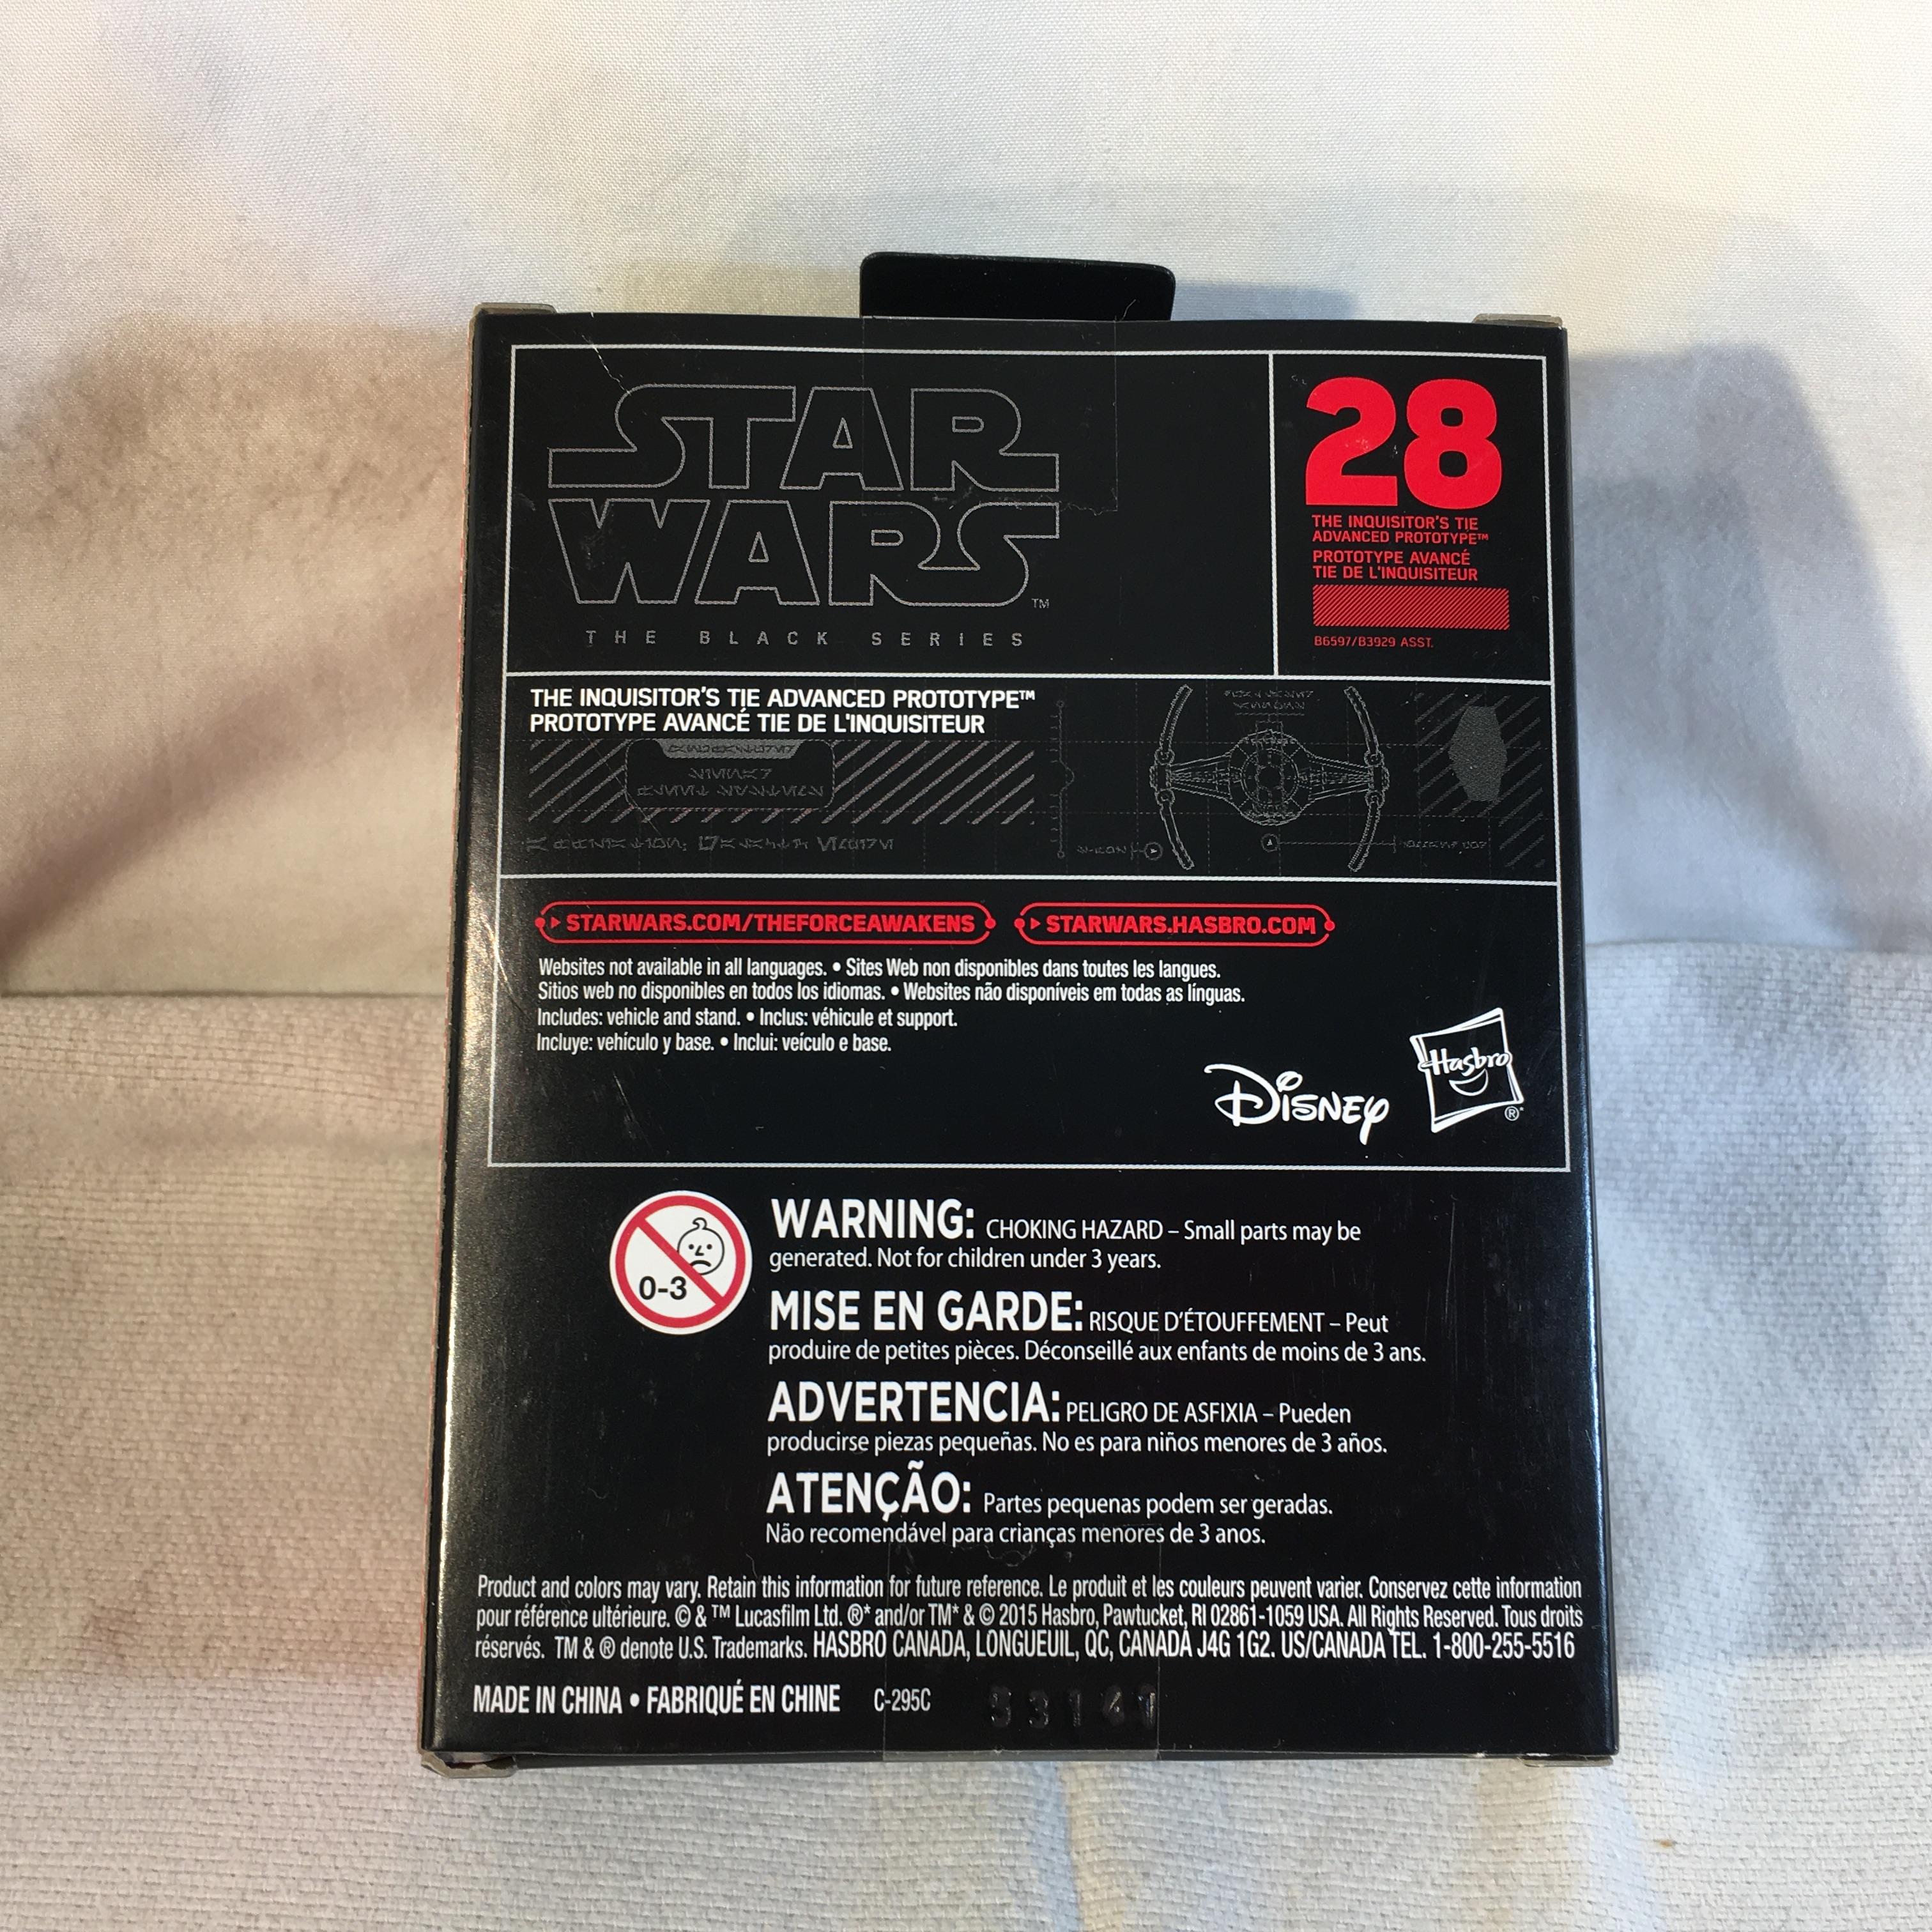 NIB Collector Star Wars The Black Series Titanium Series #28 Box Size:5x4"